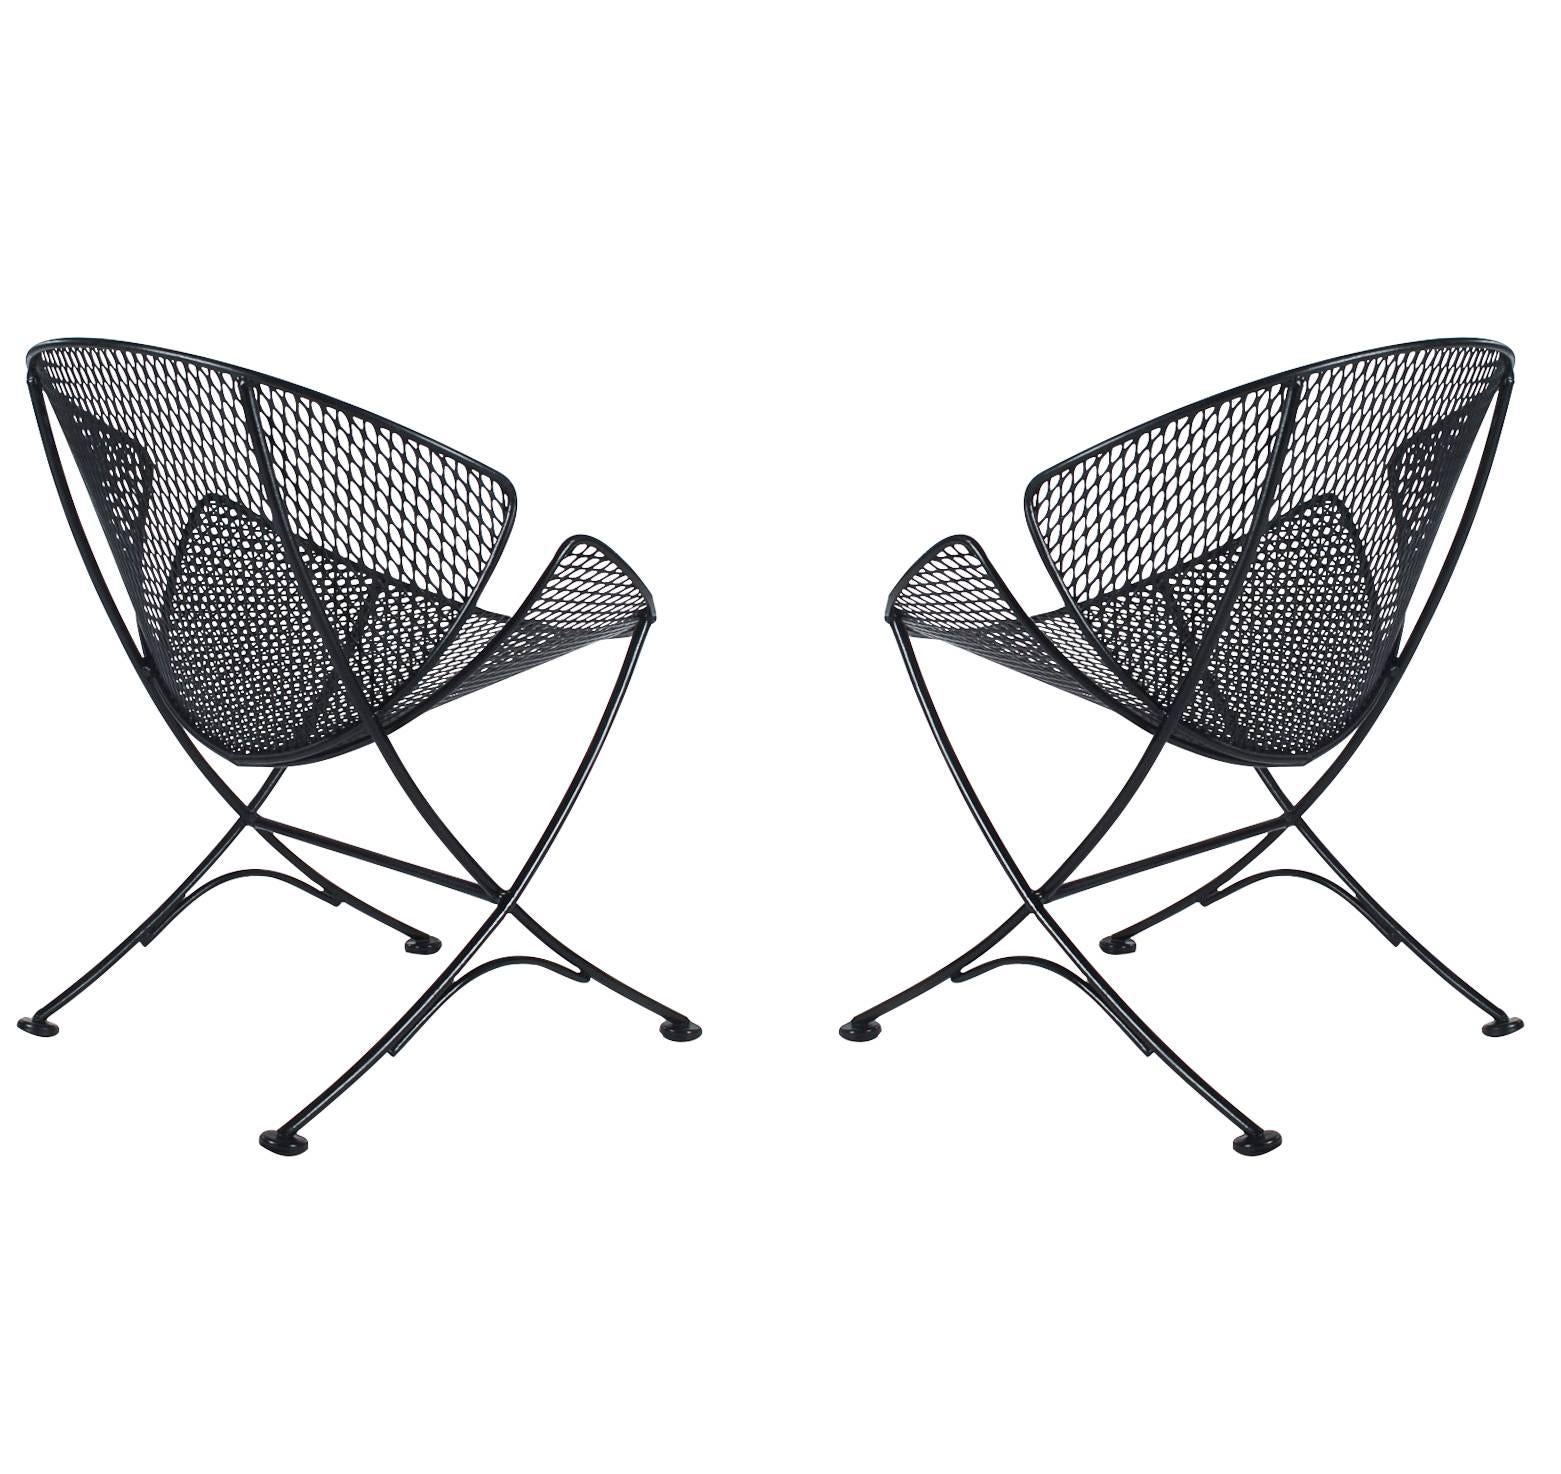 American Pair of Maurizio Tempestini Outdoor Patio Iron Lounge Chairs, Mid-Century Modern